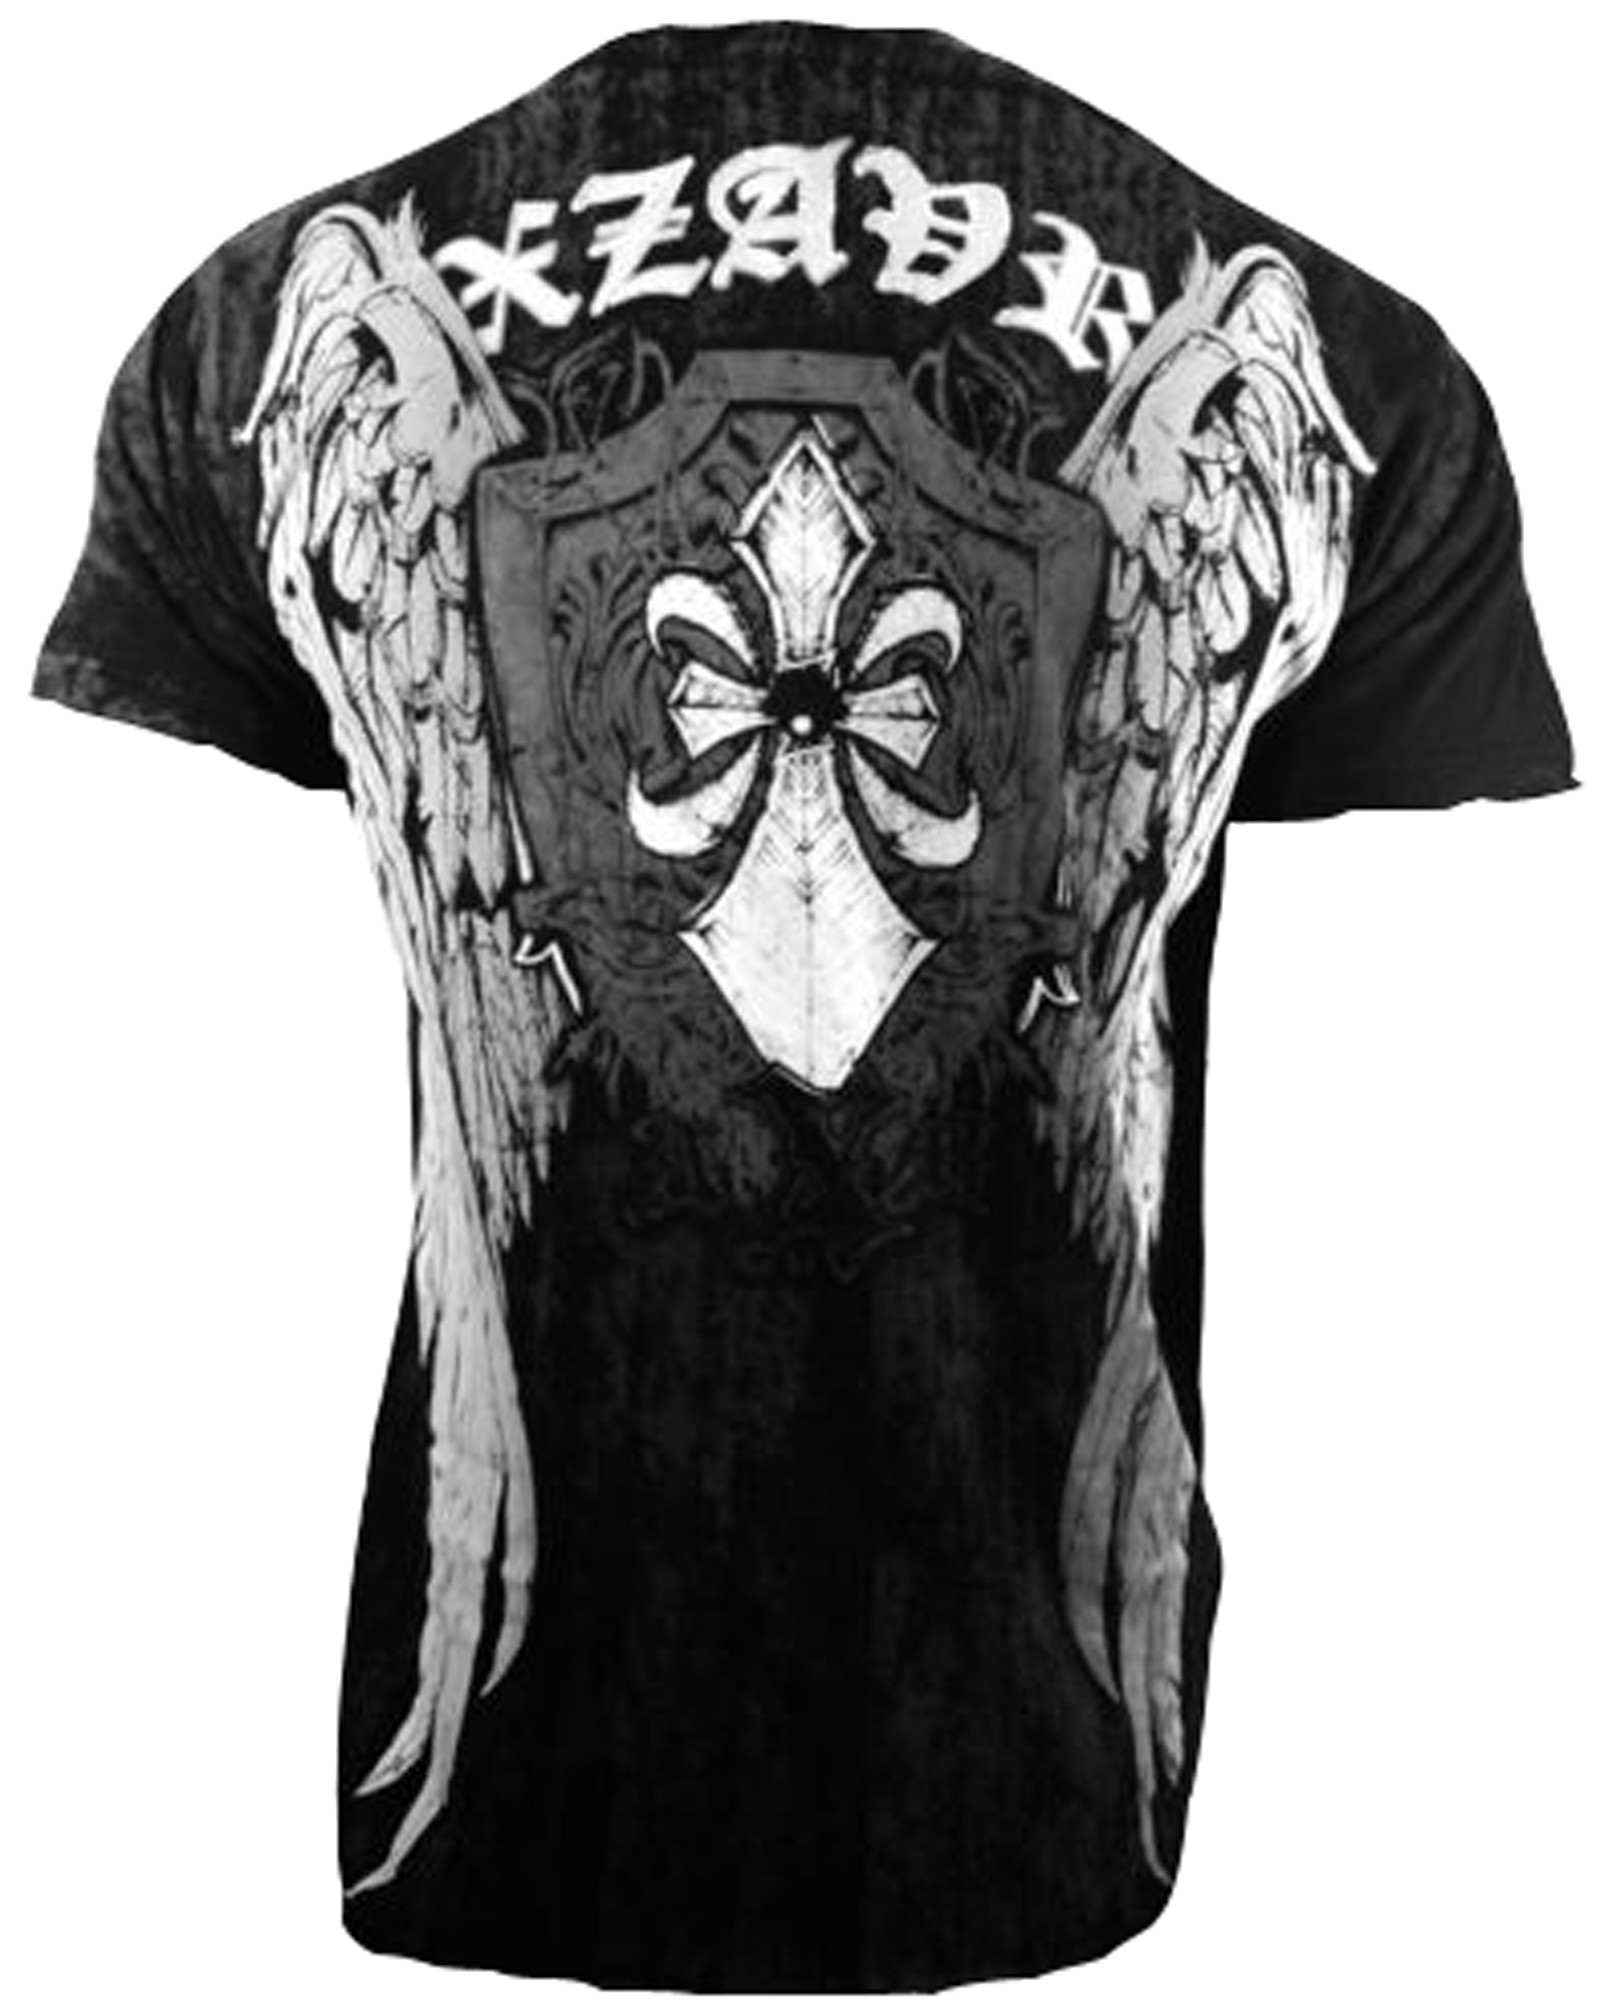 Xzavier - Black Phantom T-Shirt Back